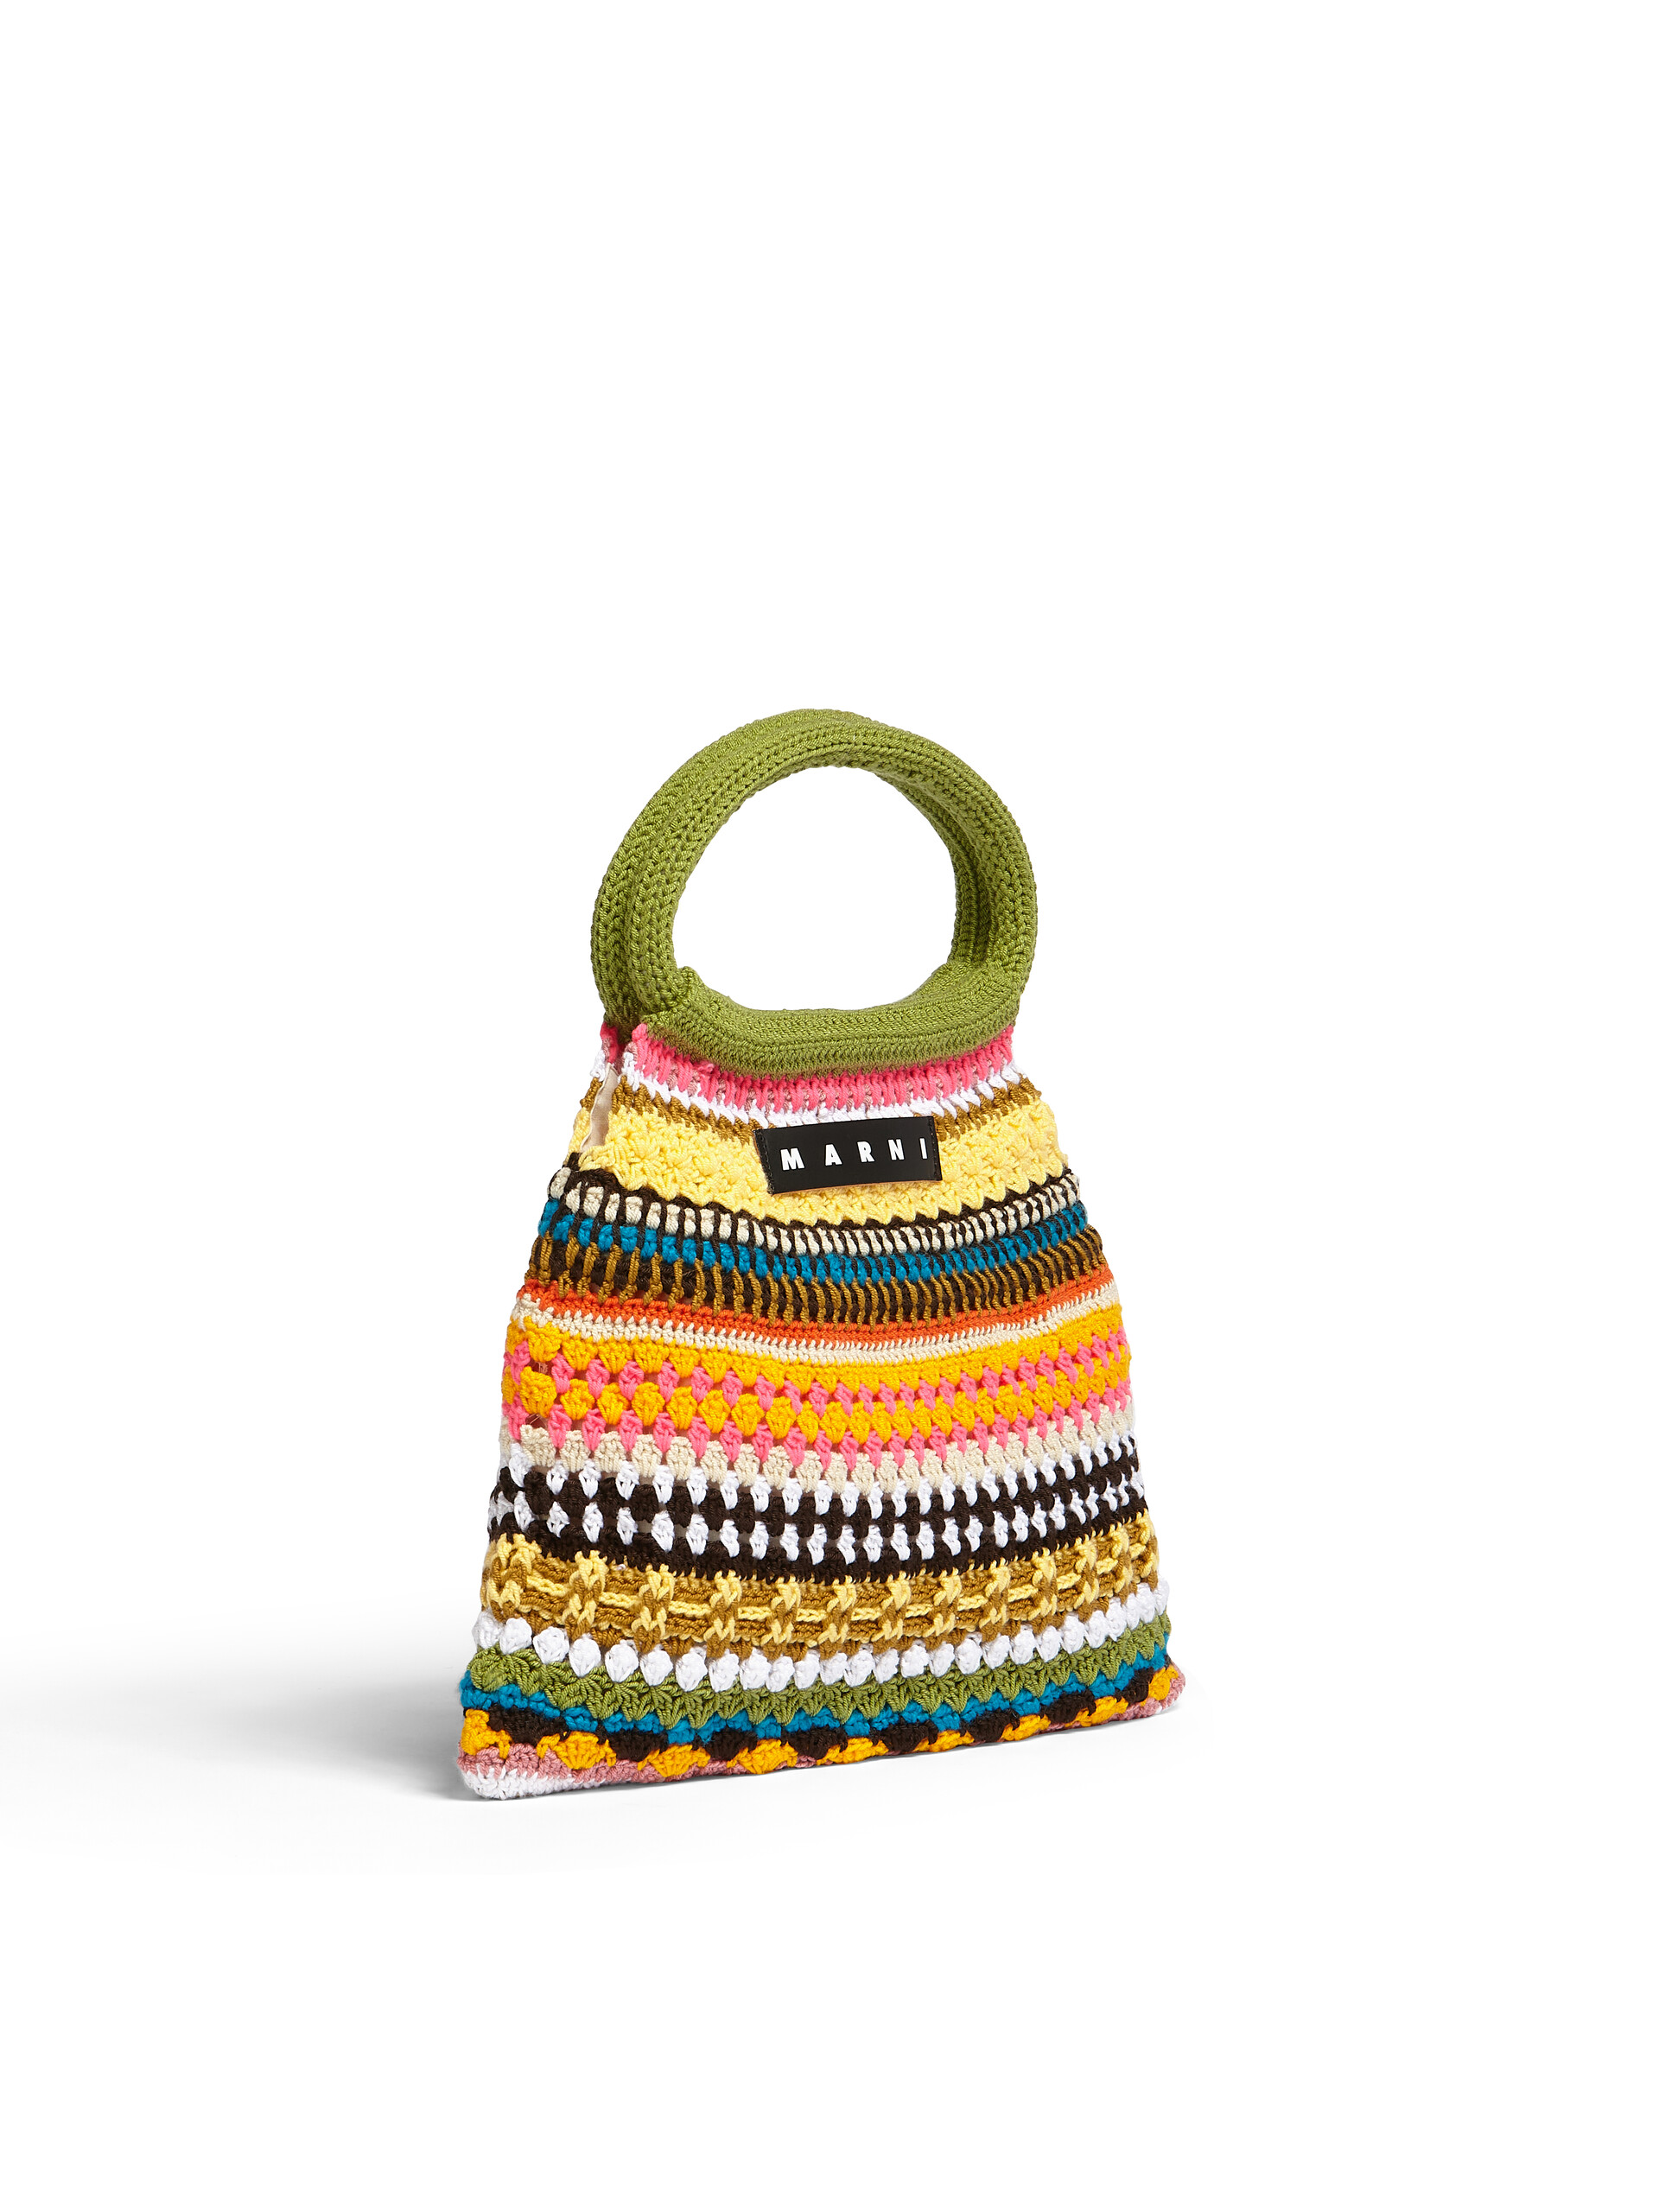 MARNI MARKET bag in green crochet - Furniture - Image 2